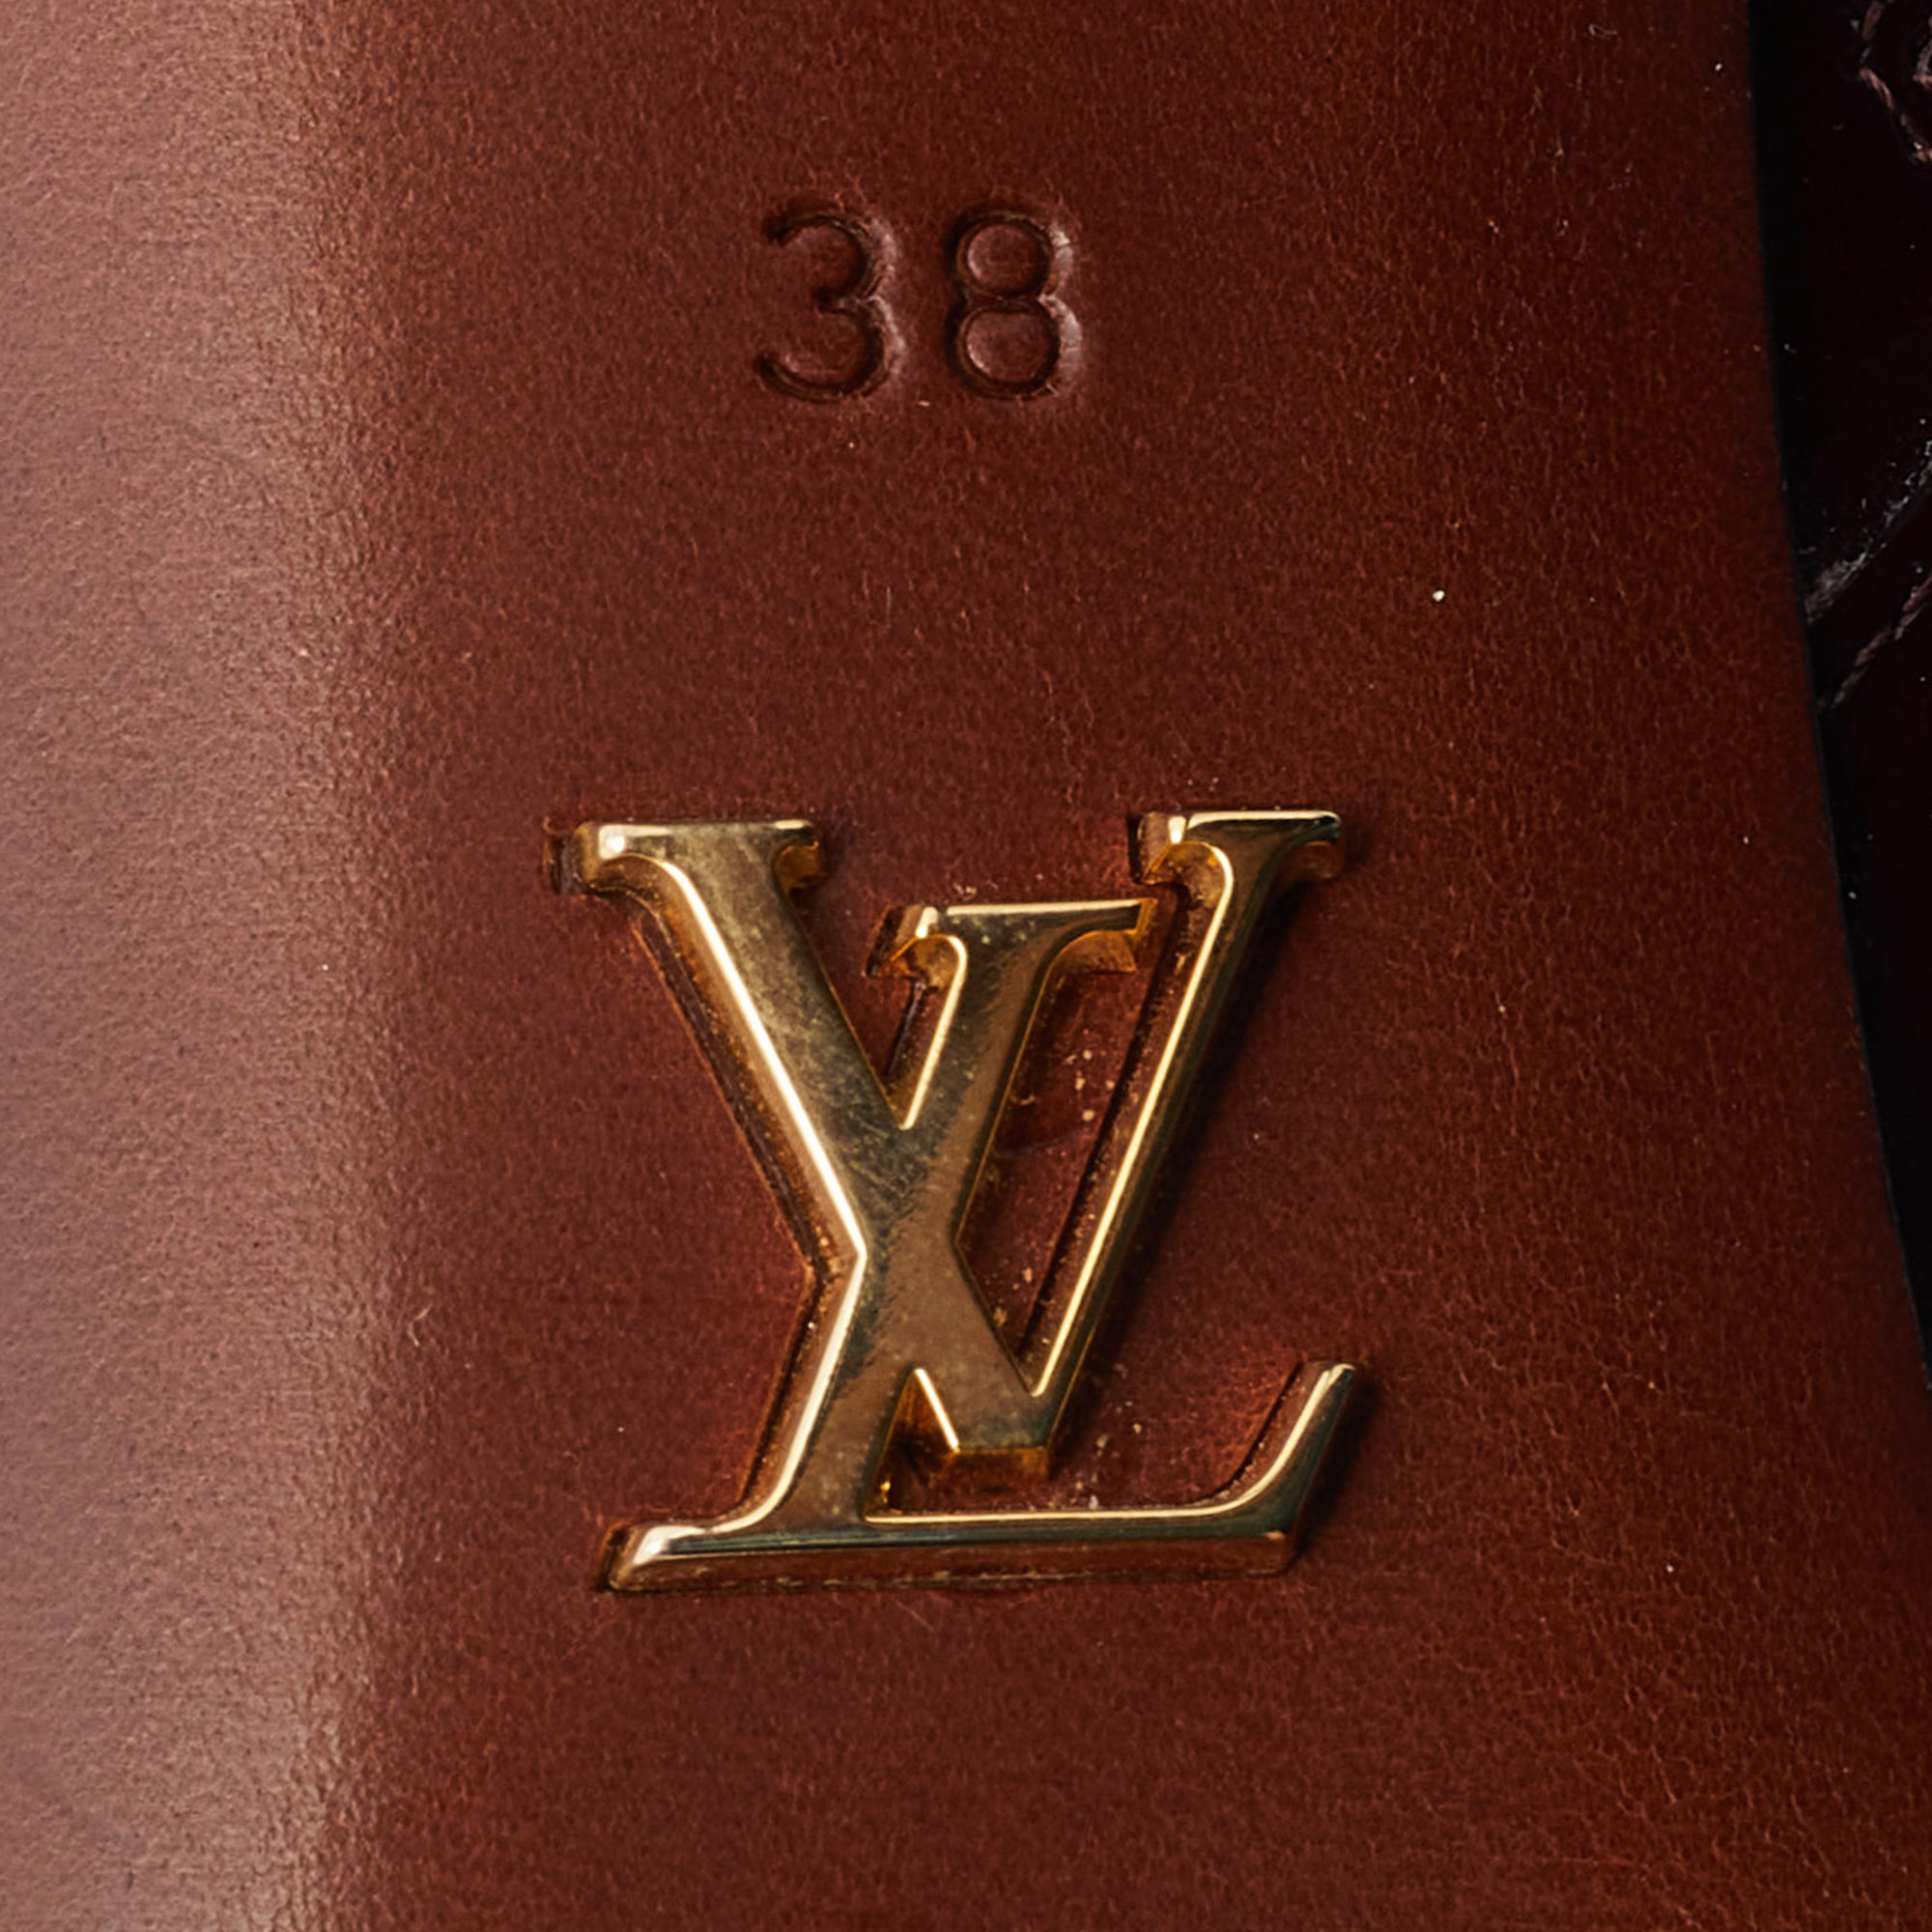 Louis Vuitton Bordeaux Epi Leather And Patent Open Toe Ankle Strap Booties Size 38